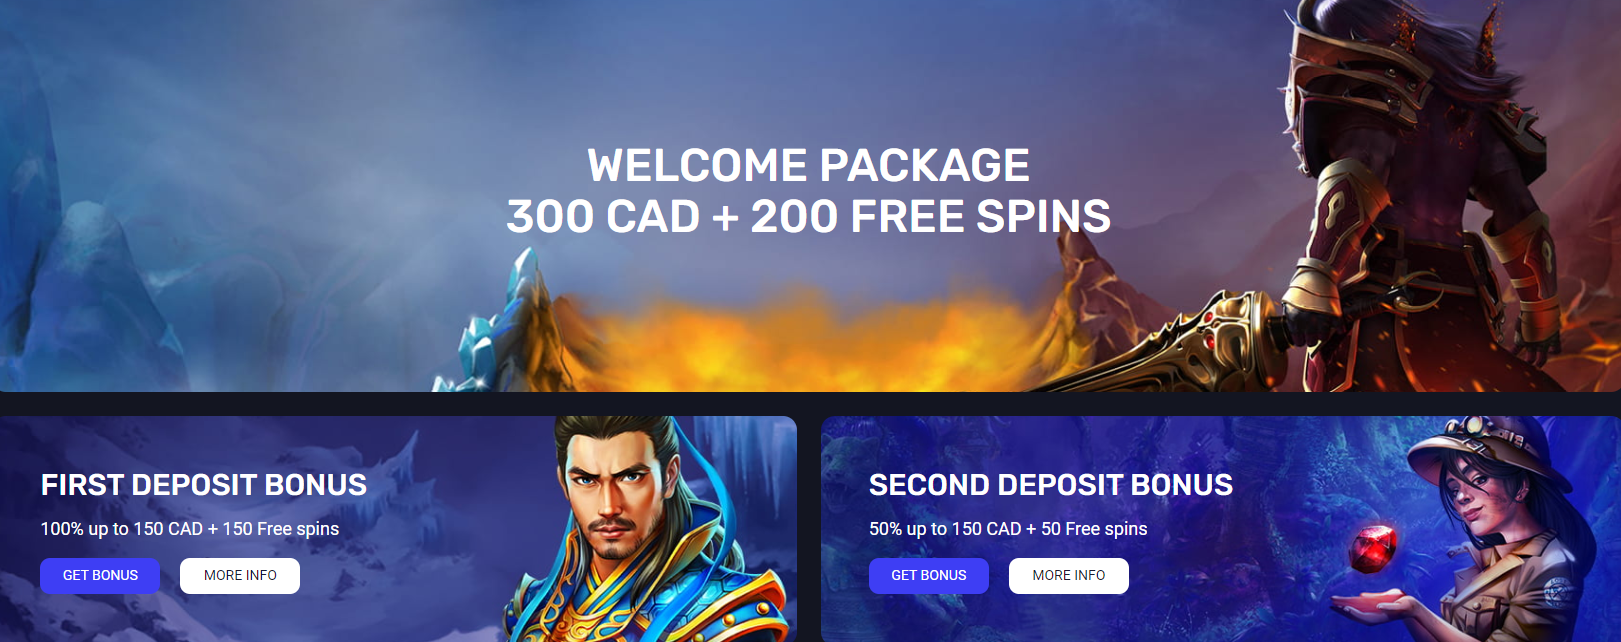 Wow Casino No Deposit bonus codes 2022